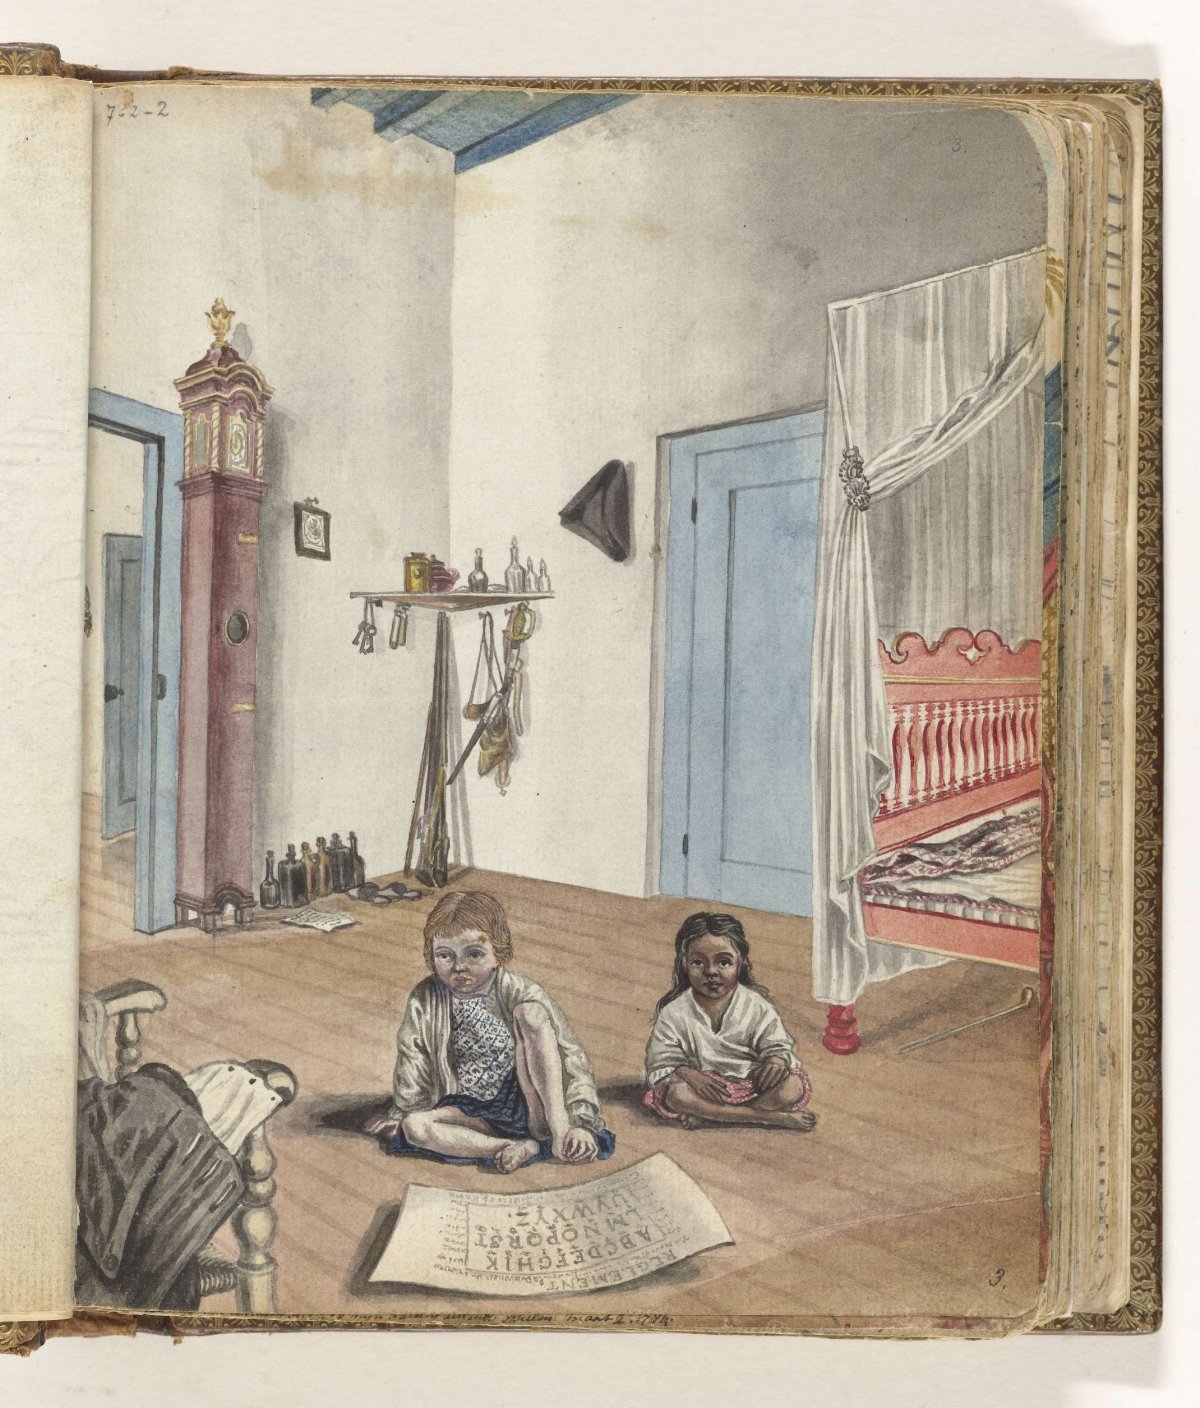 Bedroom with son Jantje and Bietja, an enslaved girl, Jan Brandes, 1784